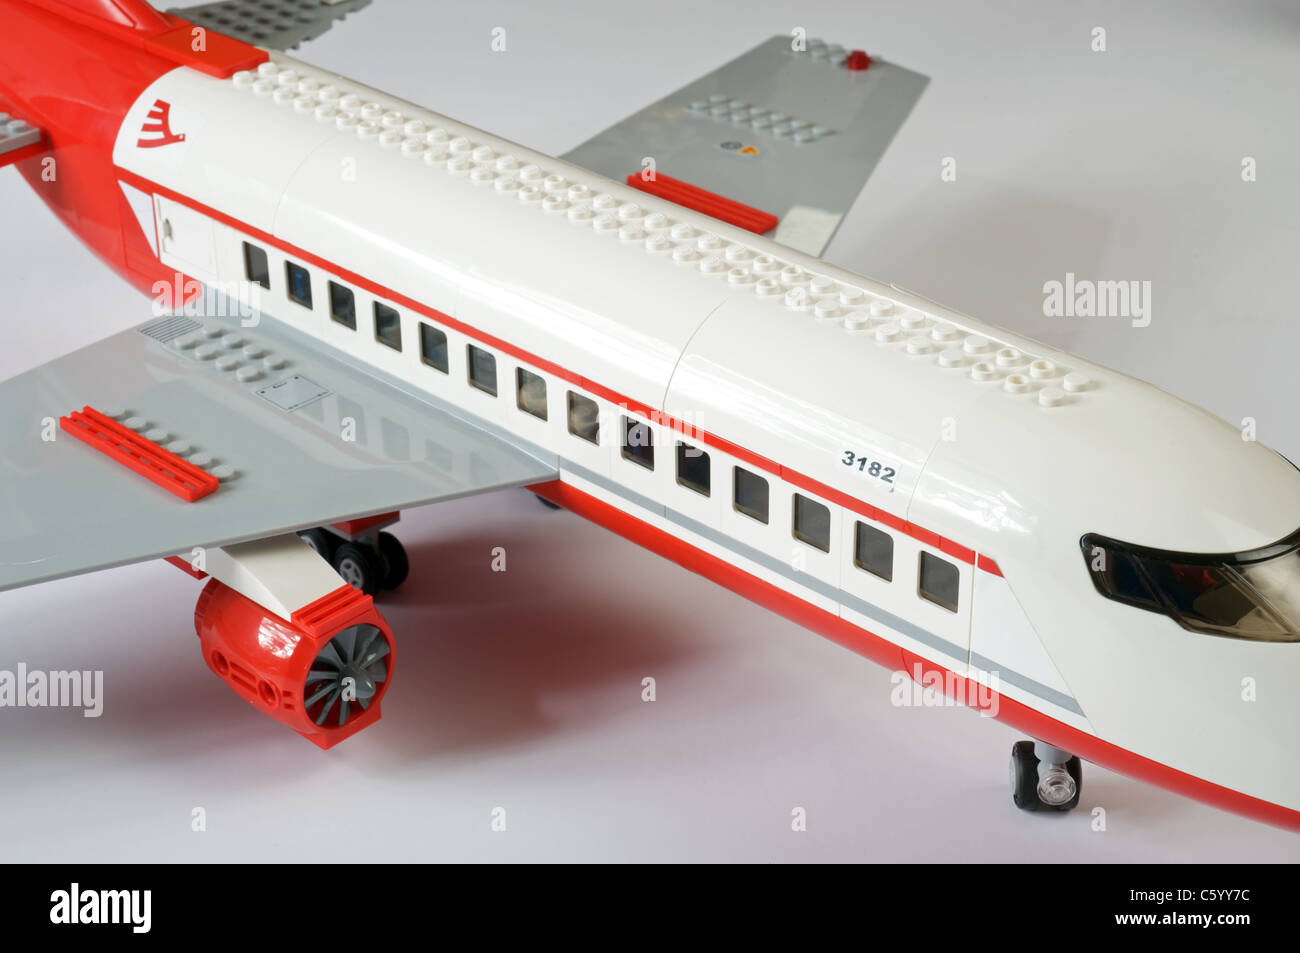 Lego model passenger aircraft Stock Photo - Alamy